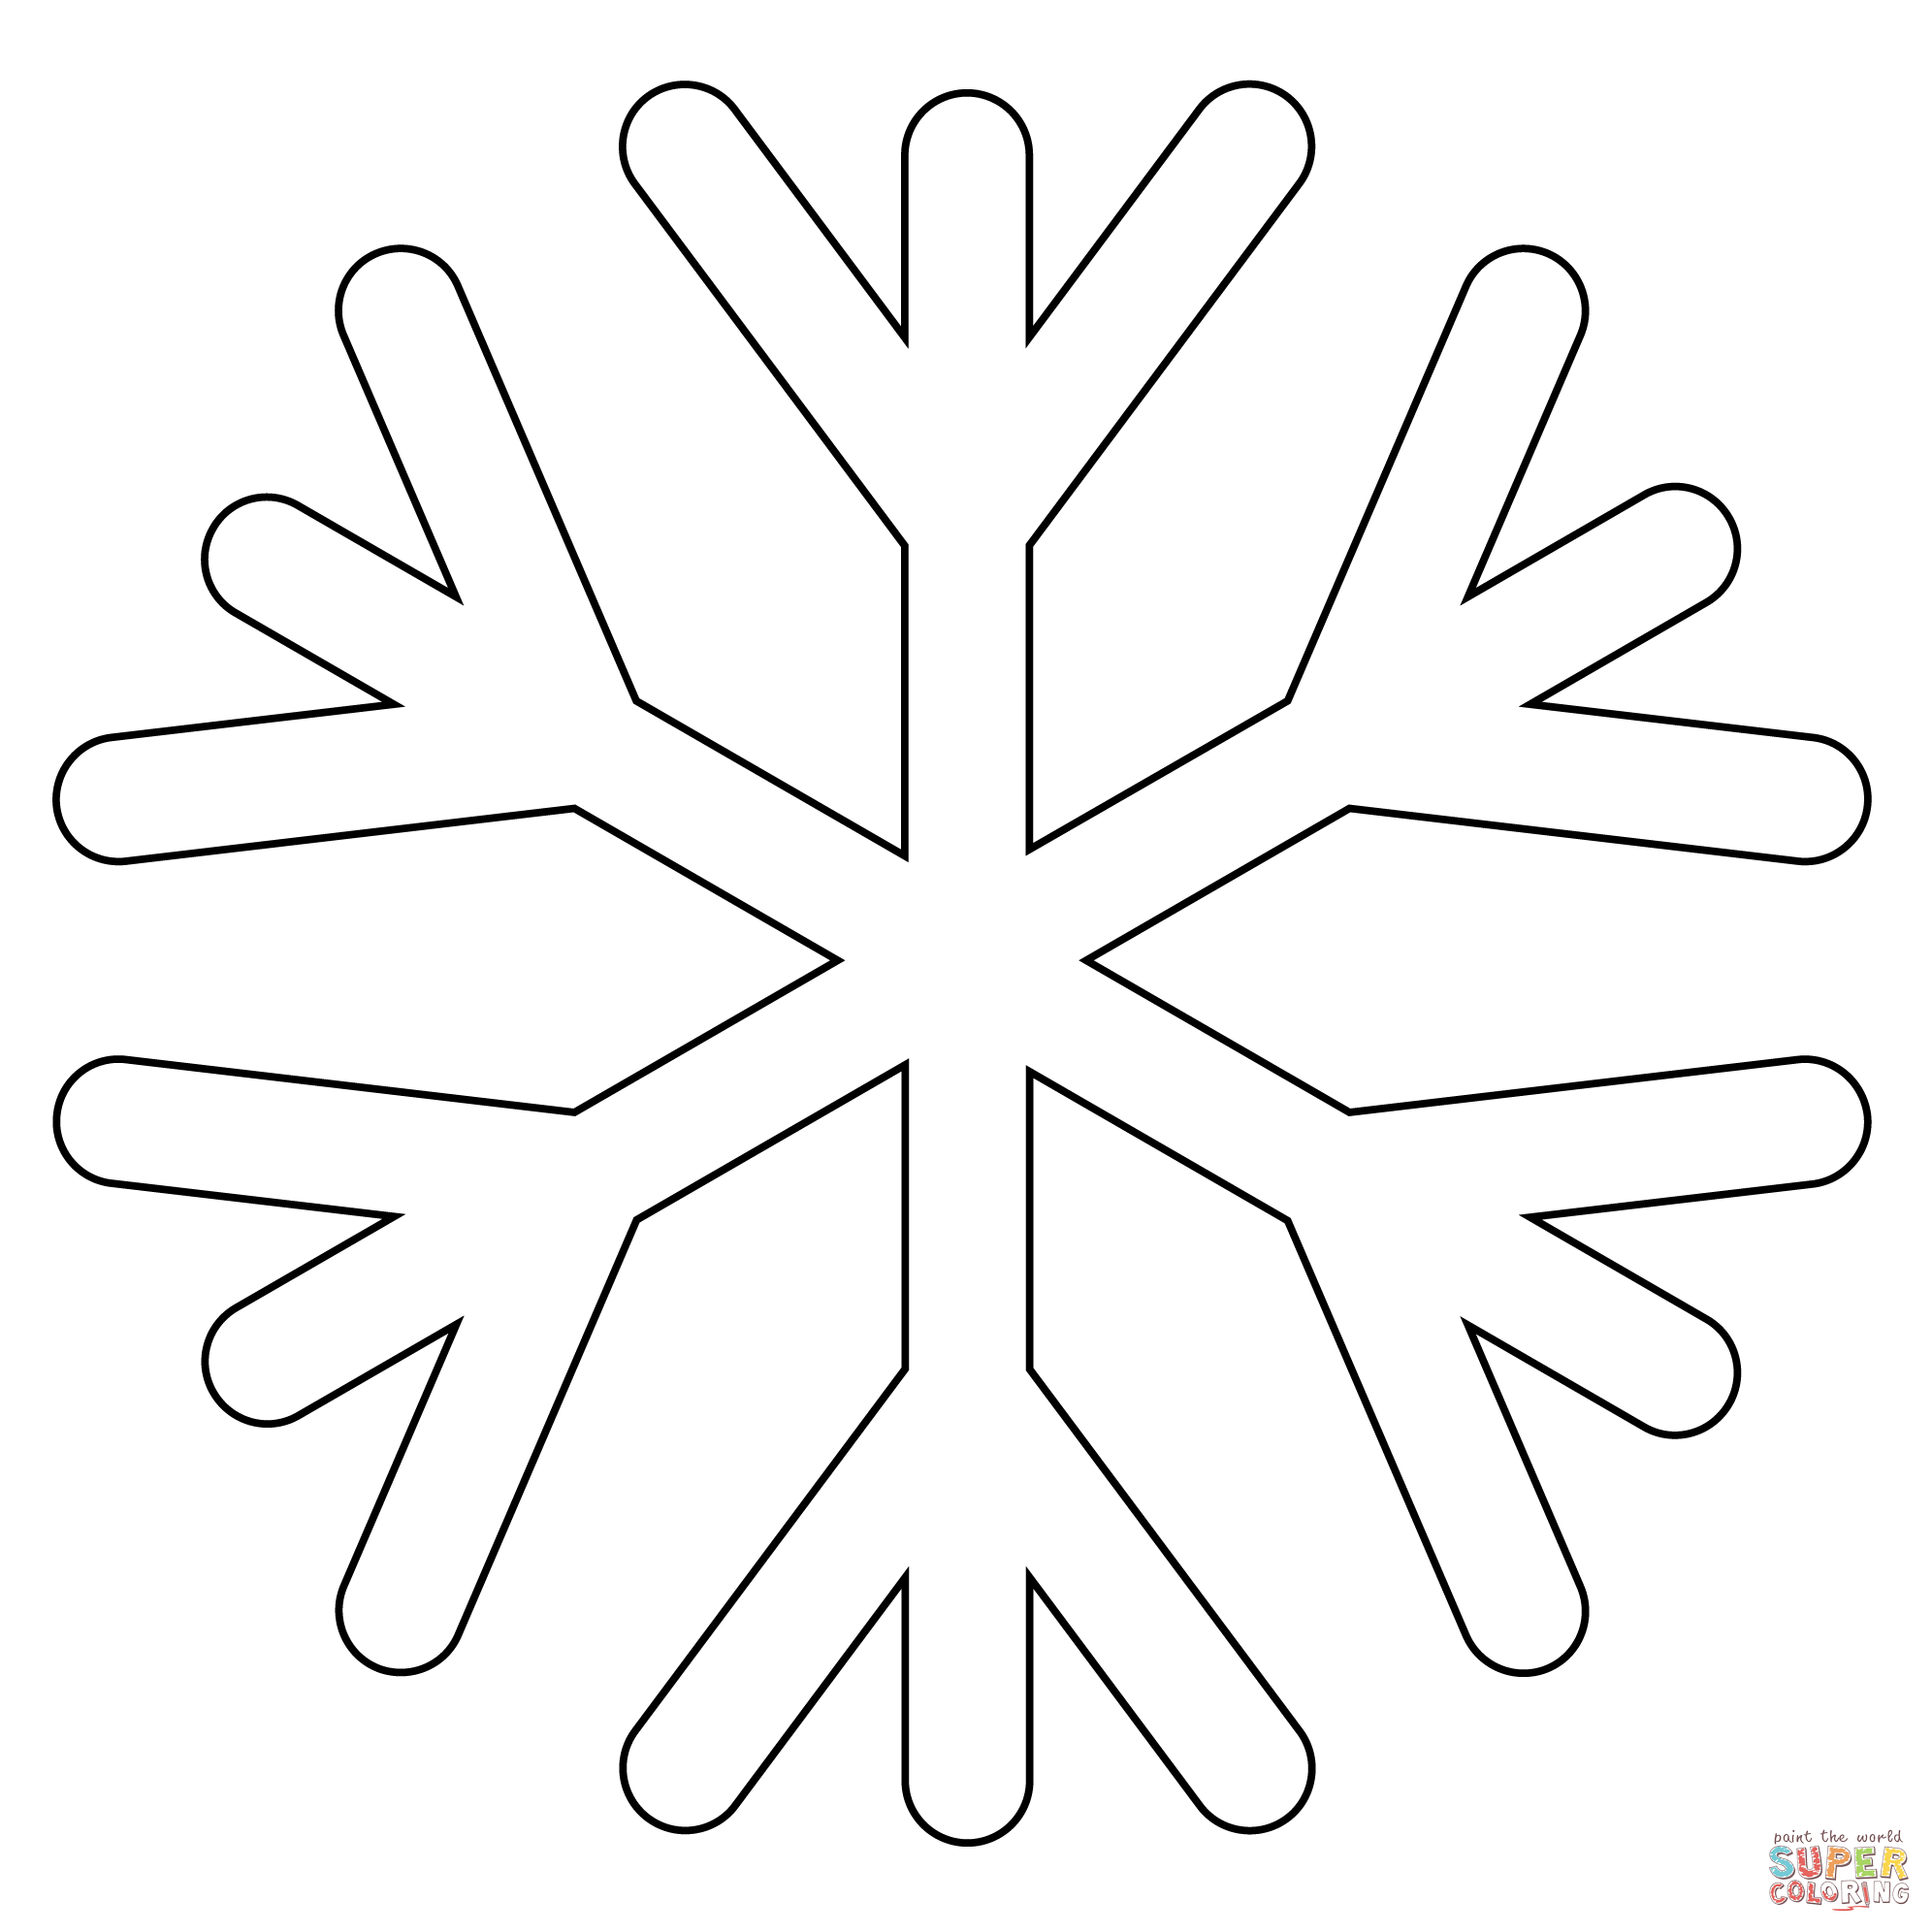 Snowflake emoji coloring page free printable coloring pages